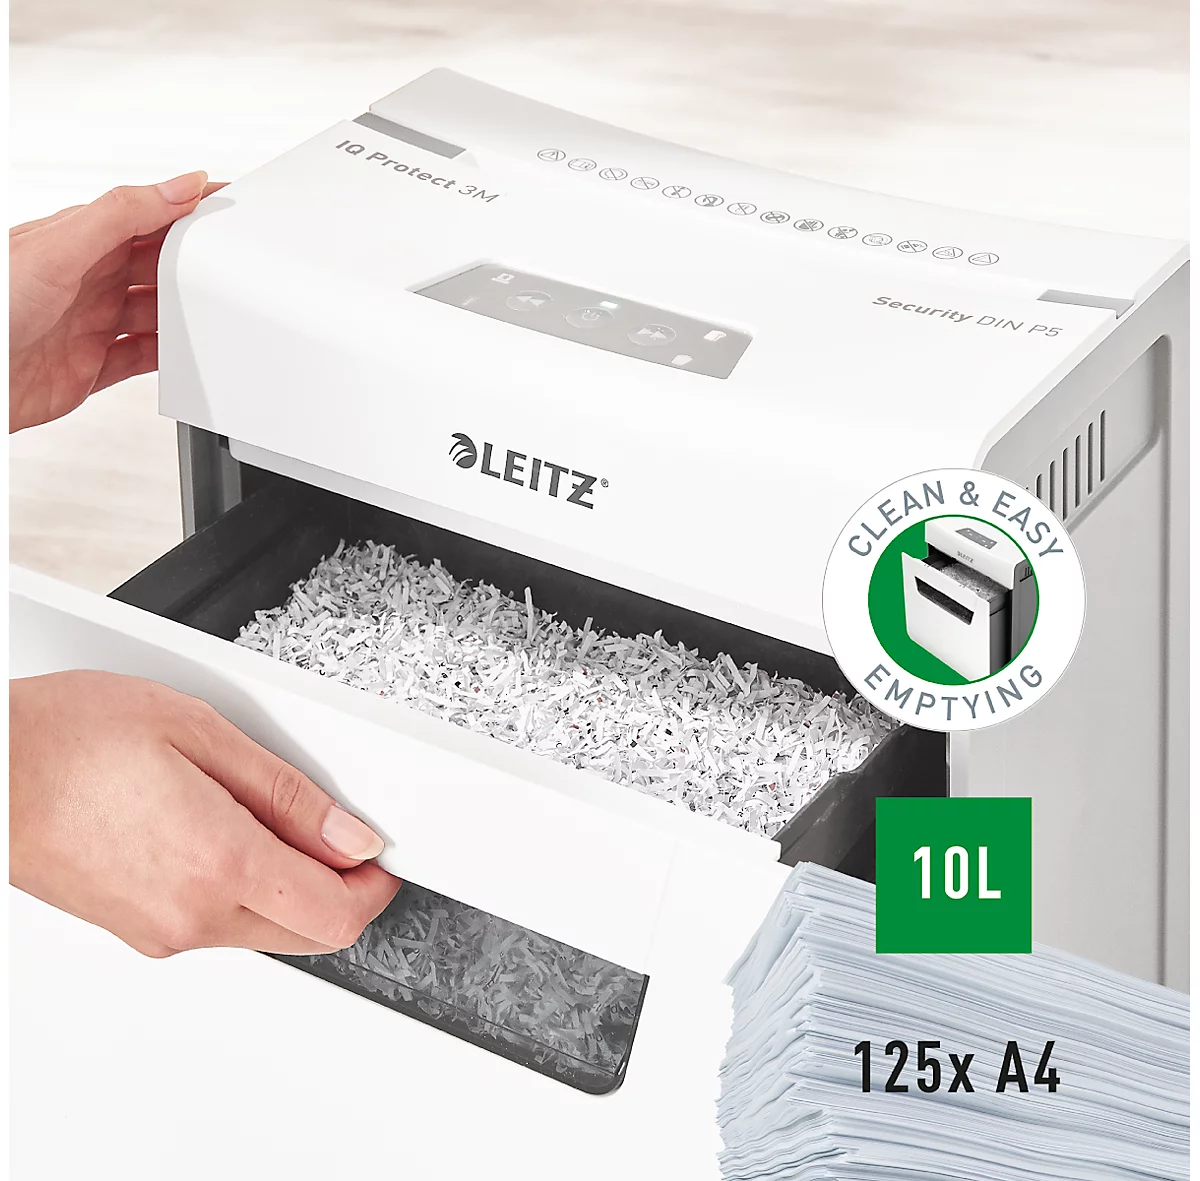 Leitz IQ 3M Protect Premium papiervernietiger P5, micro cut 2 x 15 mm, 10 l, snijcapaciteit van 3 vellen, anti-papierstoringstechnologie, wit